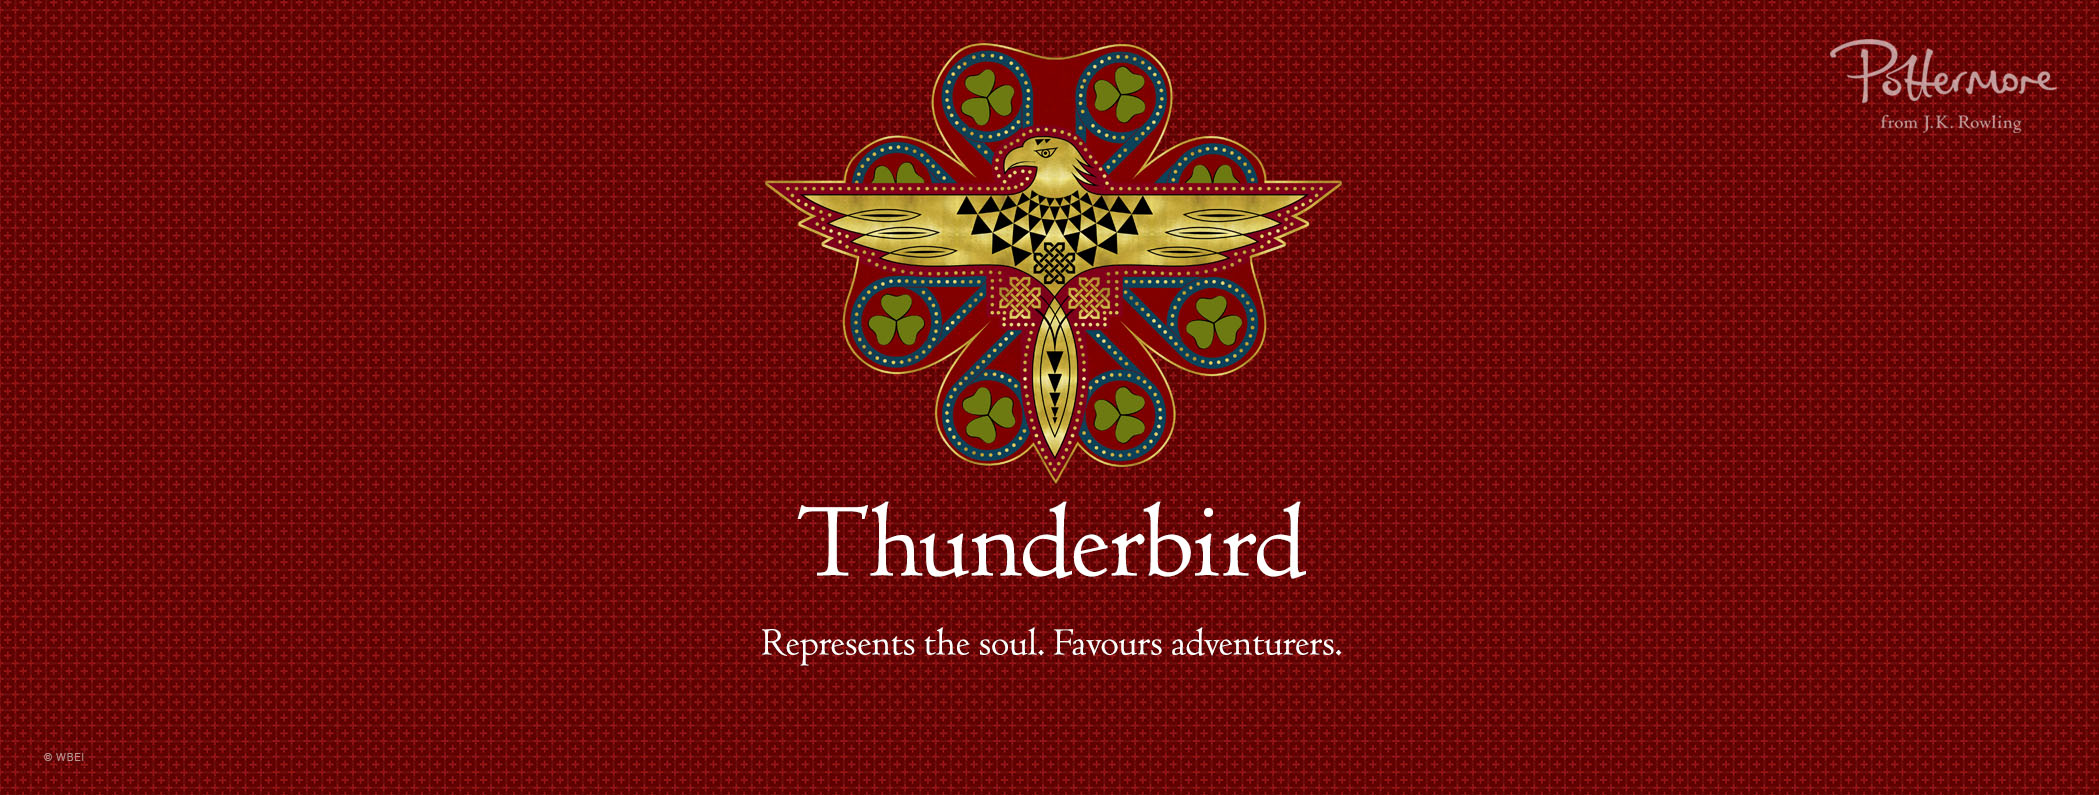 Ilvermorny_Wallpapers_Thunderbird.jpg